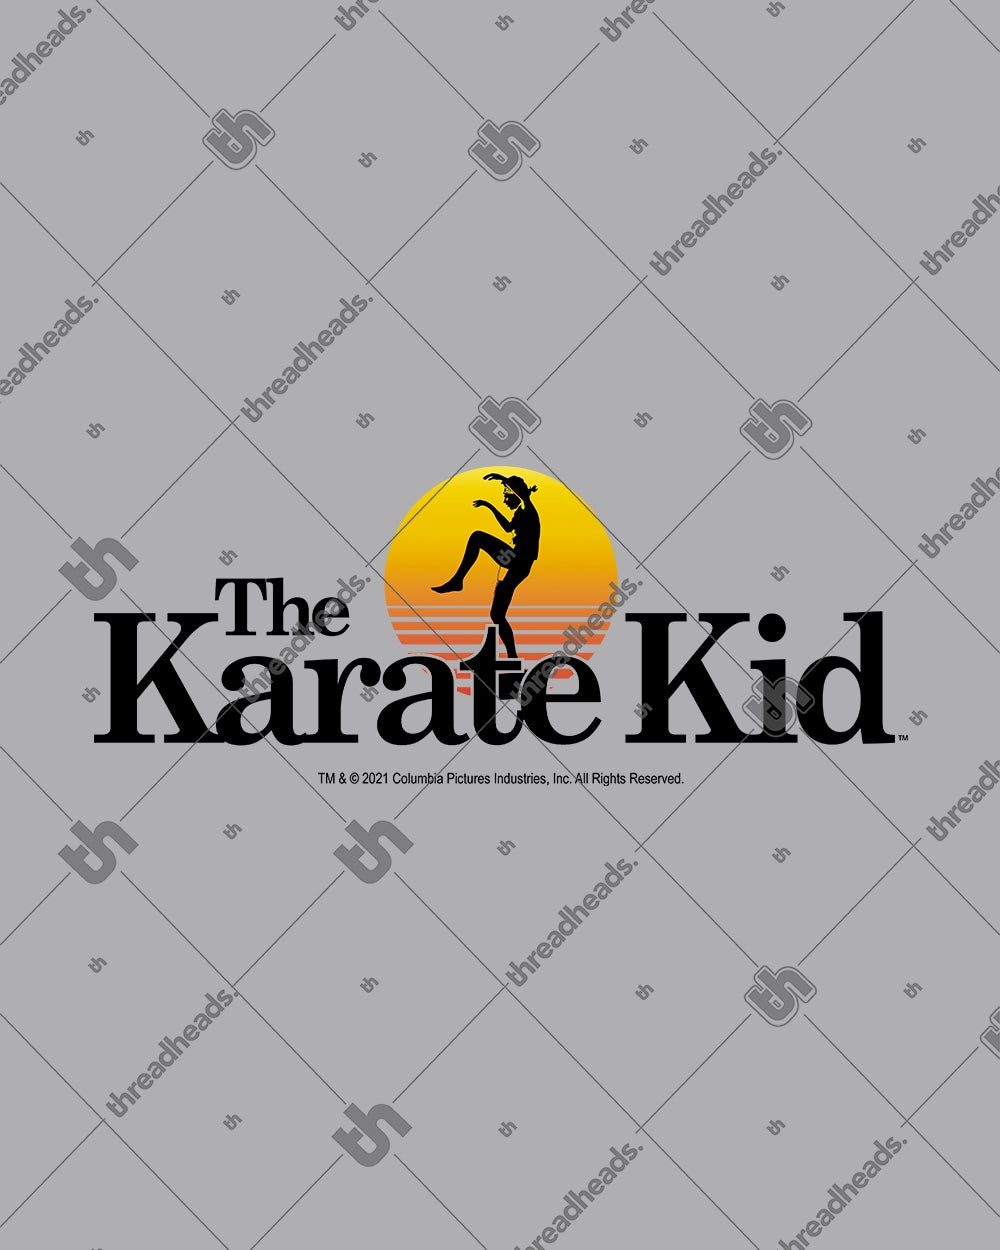 Karate Kid Logo T-Shirt Australia Online #colour_grey